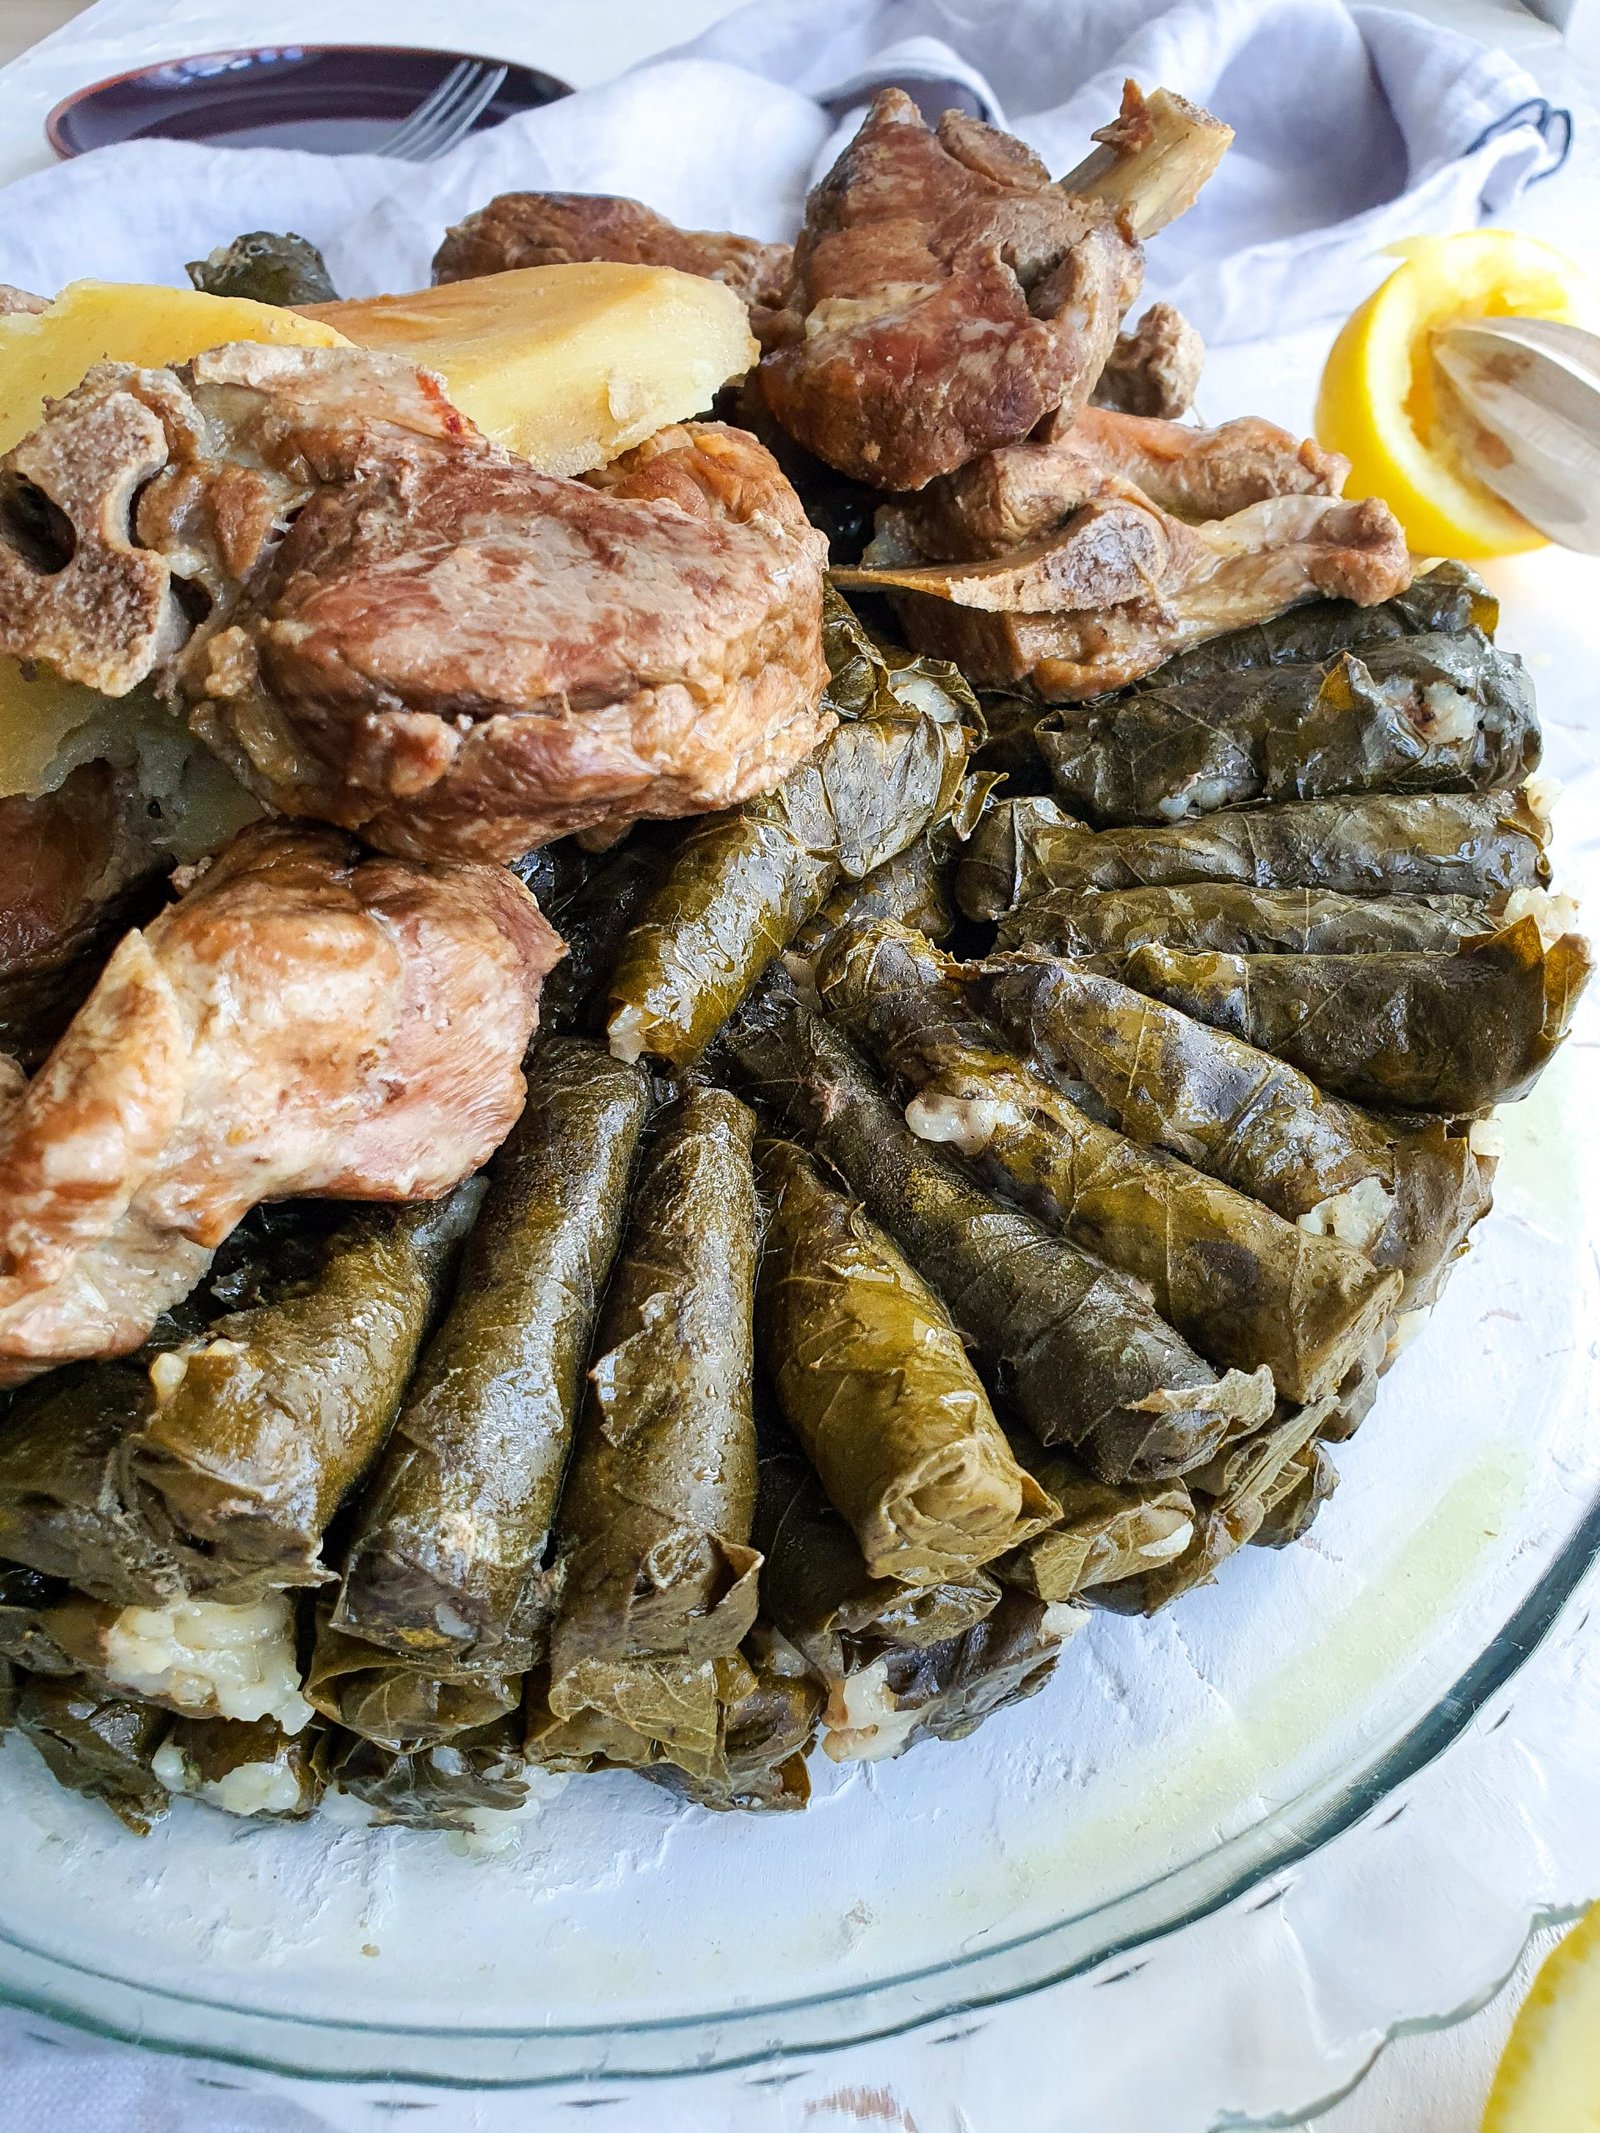 Syrian Stuffed Vine Leaves (Warak Enab) with lamb in bone is a savory flavorful meal